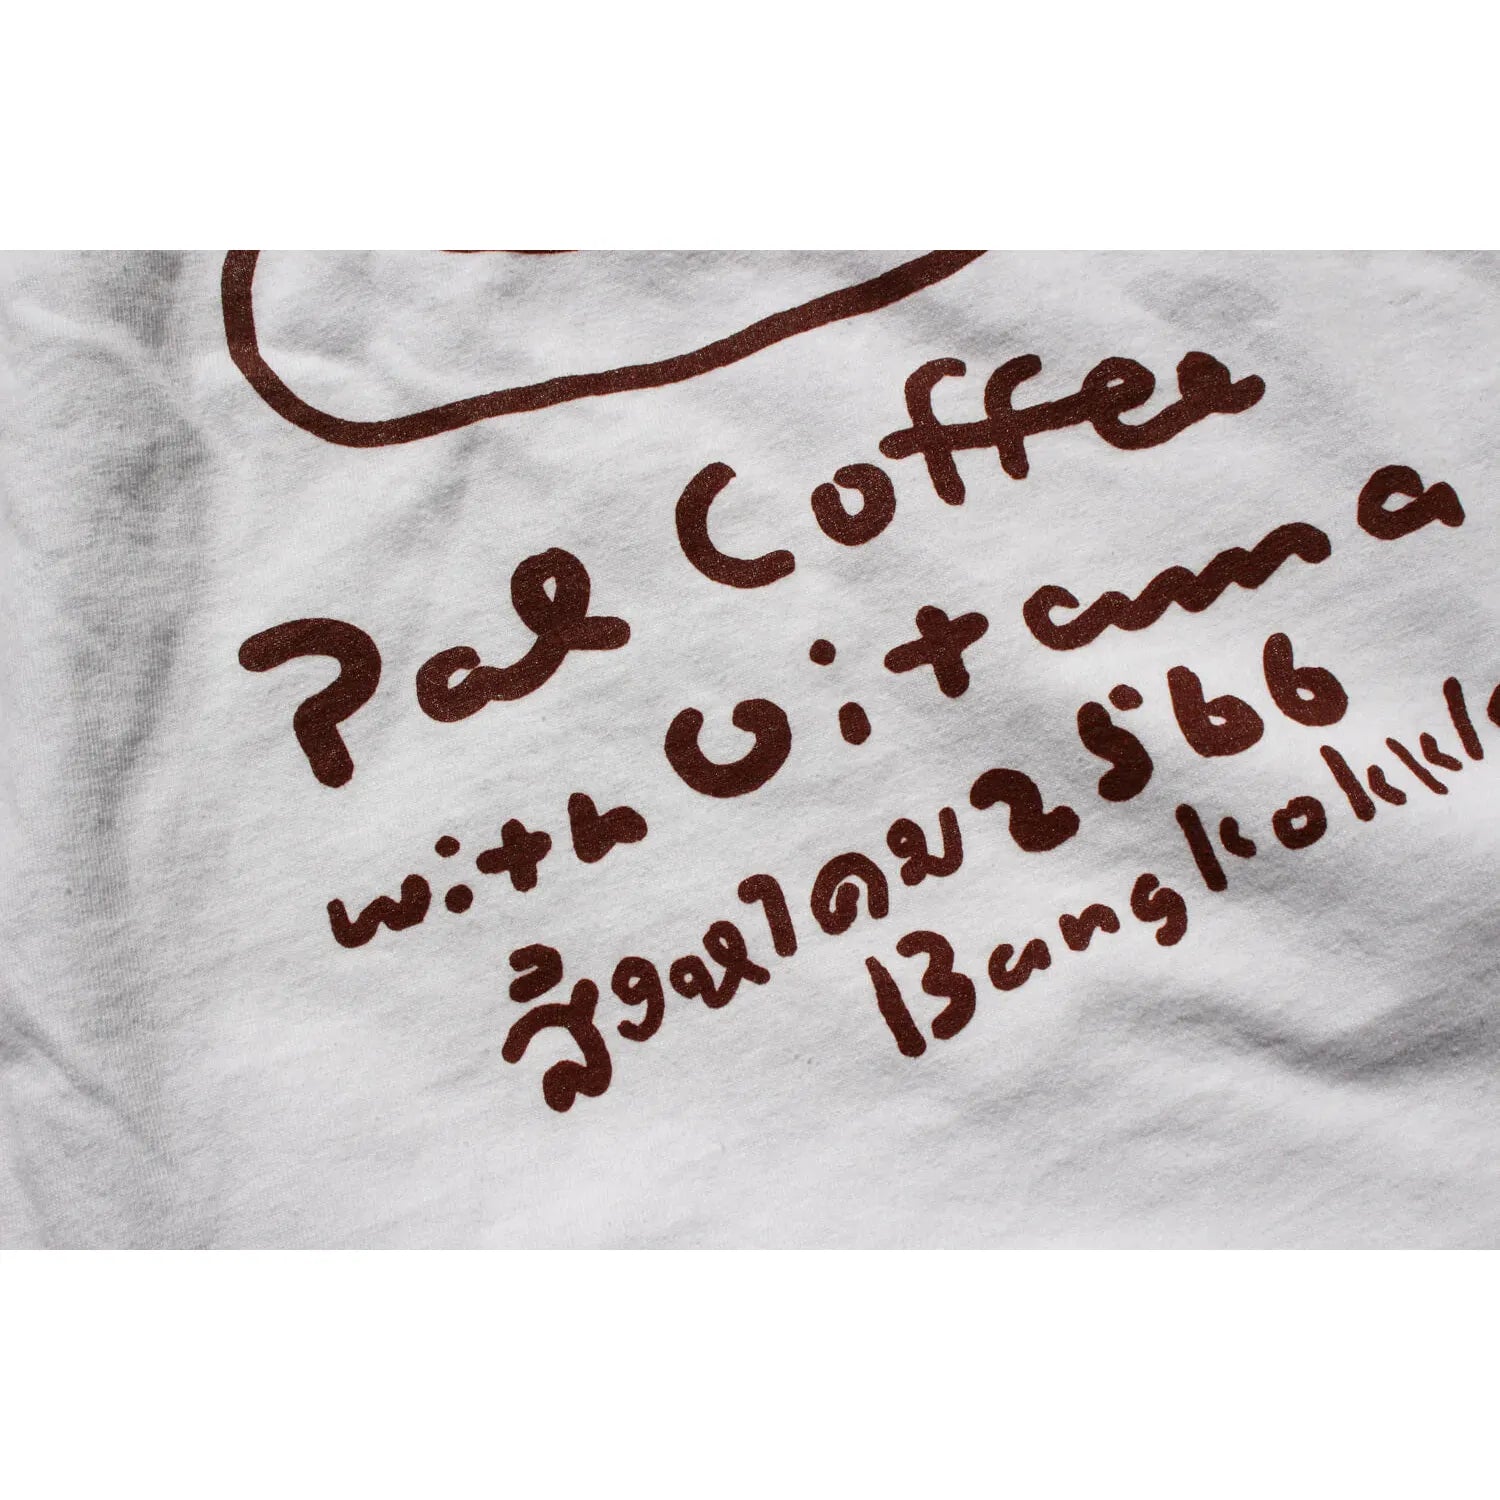 Pal Coffee x Oitama Cat T-shirt